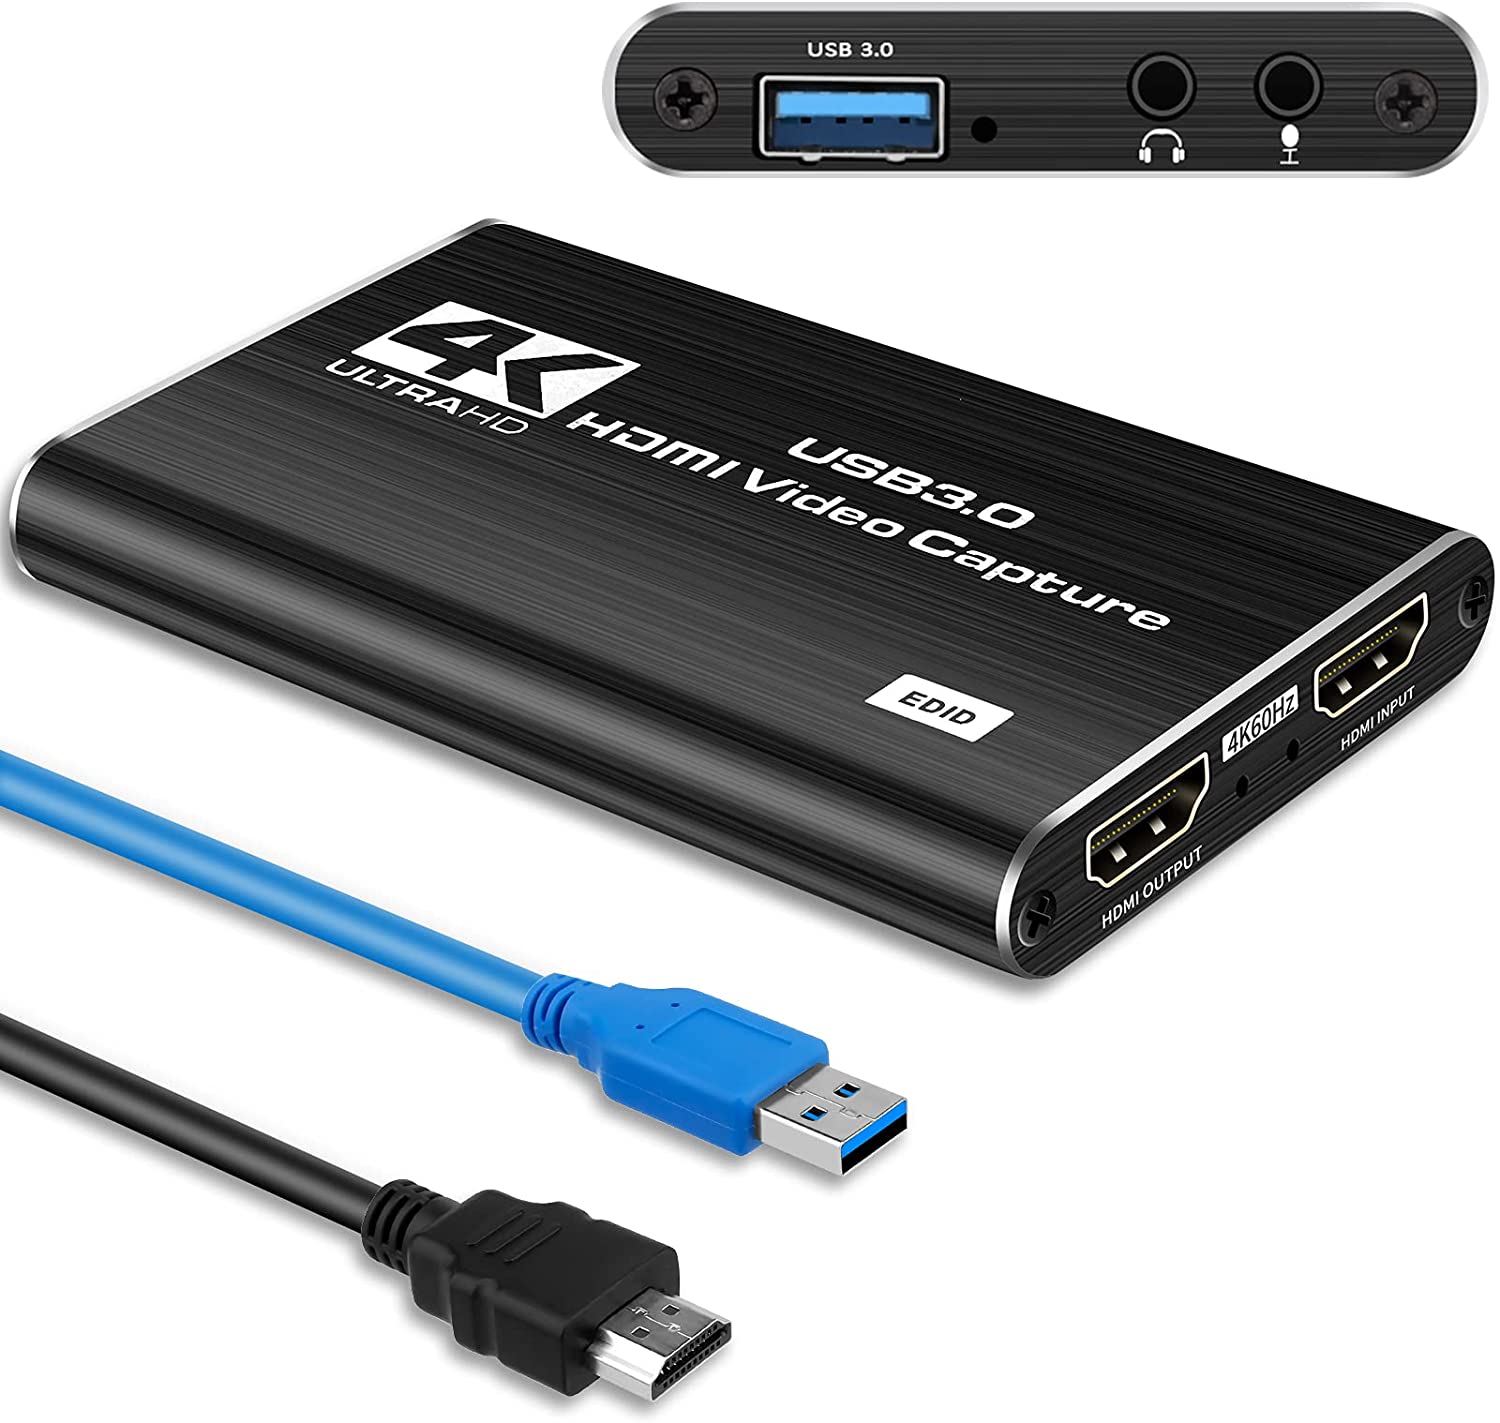 deformation præmedicinering udvikling 4K Video Capture Card USB 3.0 1080P 60fps HDMI Audio Video Capture Device  Portable Video Converte